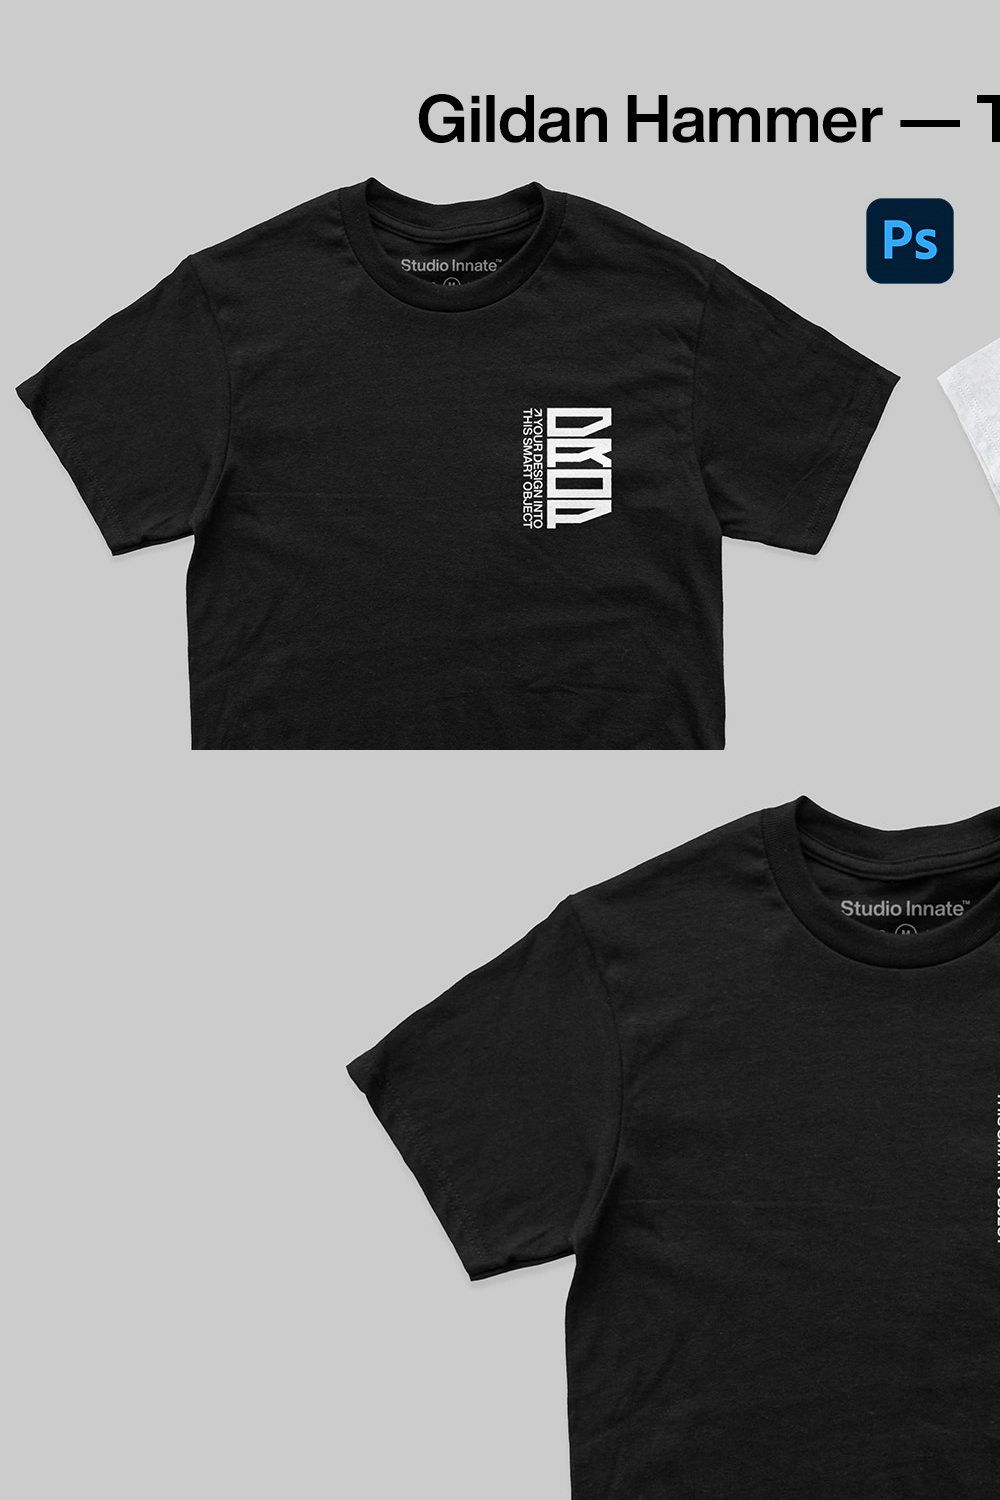 Gildan Hammer T-Shirt Mockup pinterest preview image.